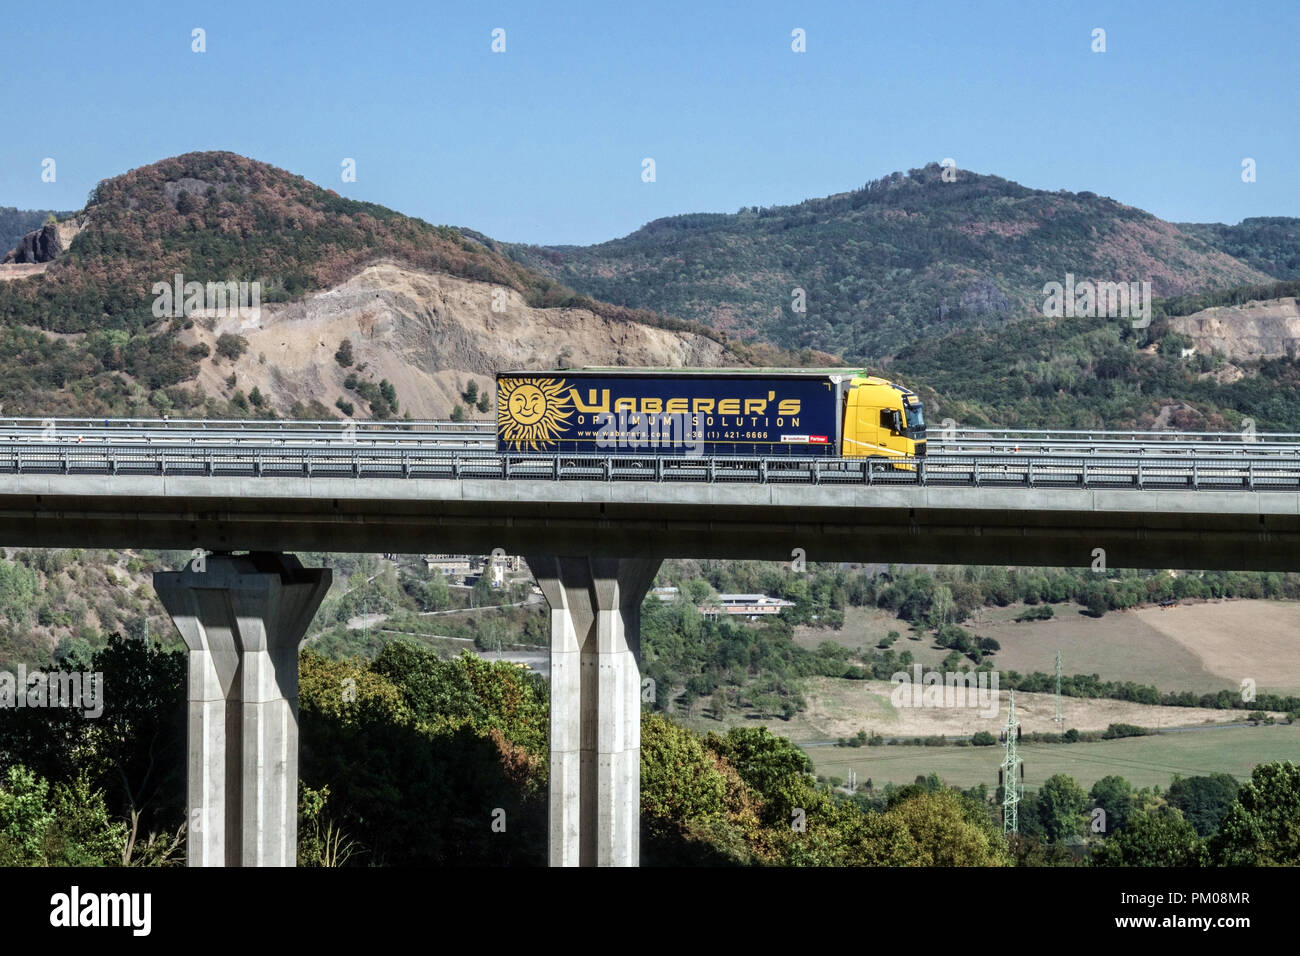 Waberers truck on a highway bridge, Czech Republic Lorry bridge Stock Photo